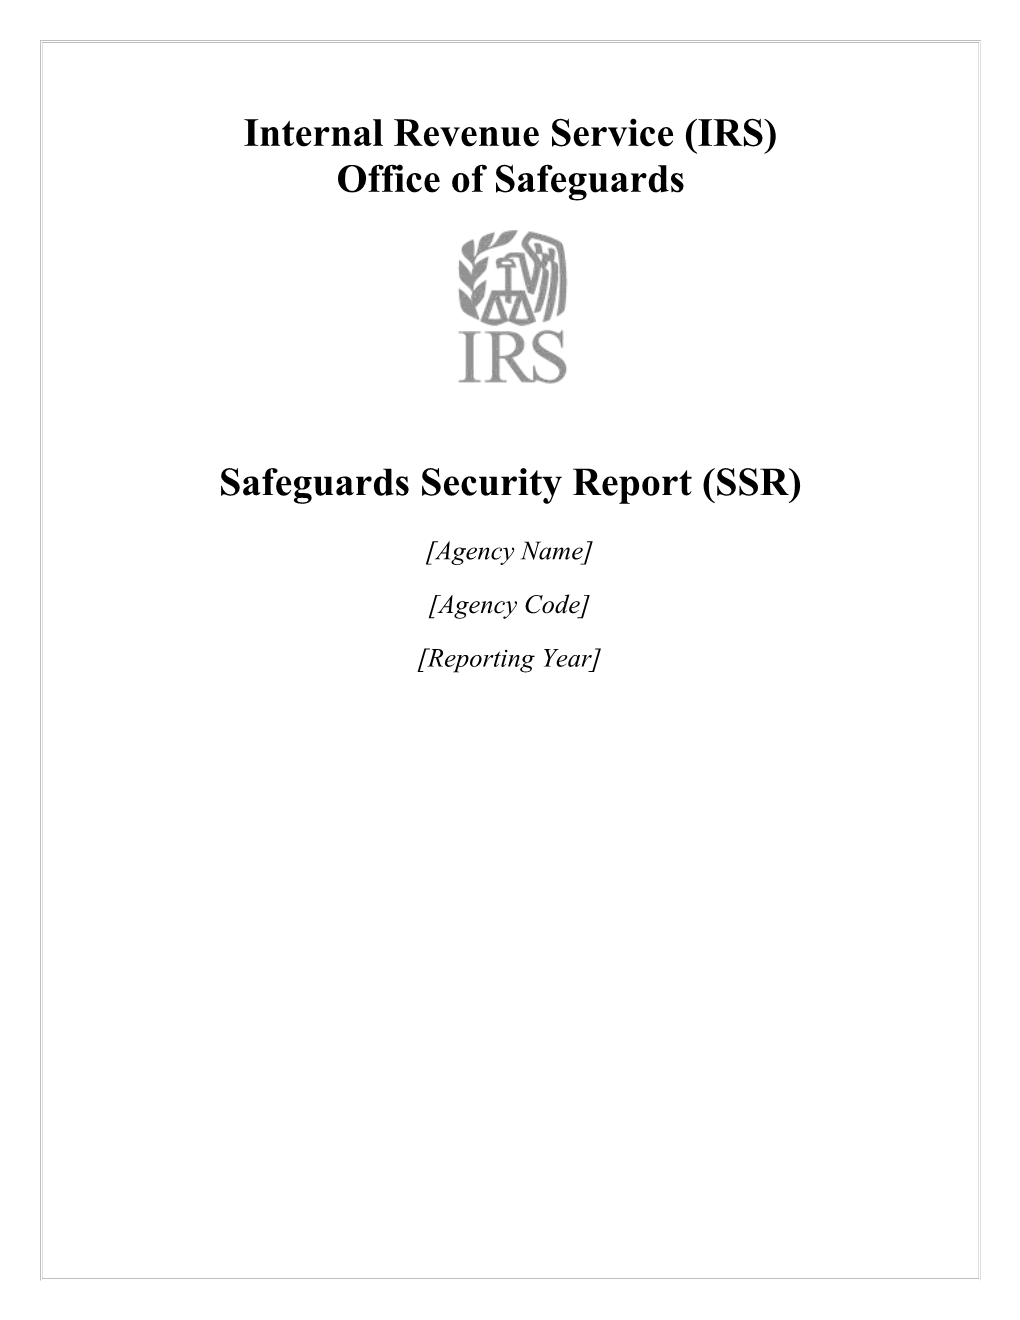 Internal Revenue Service (IRS) Office Of Safeguards